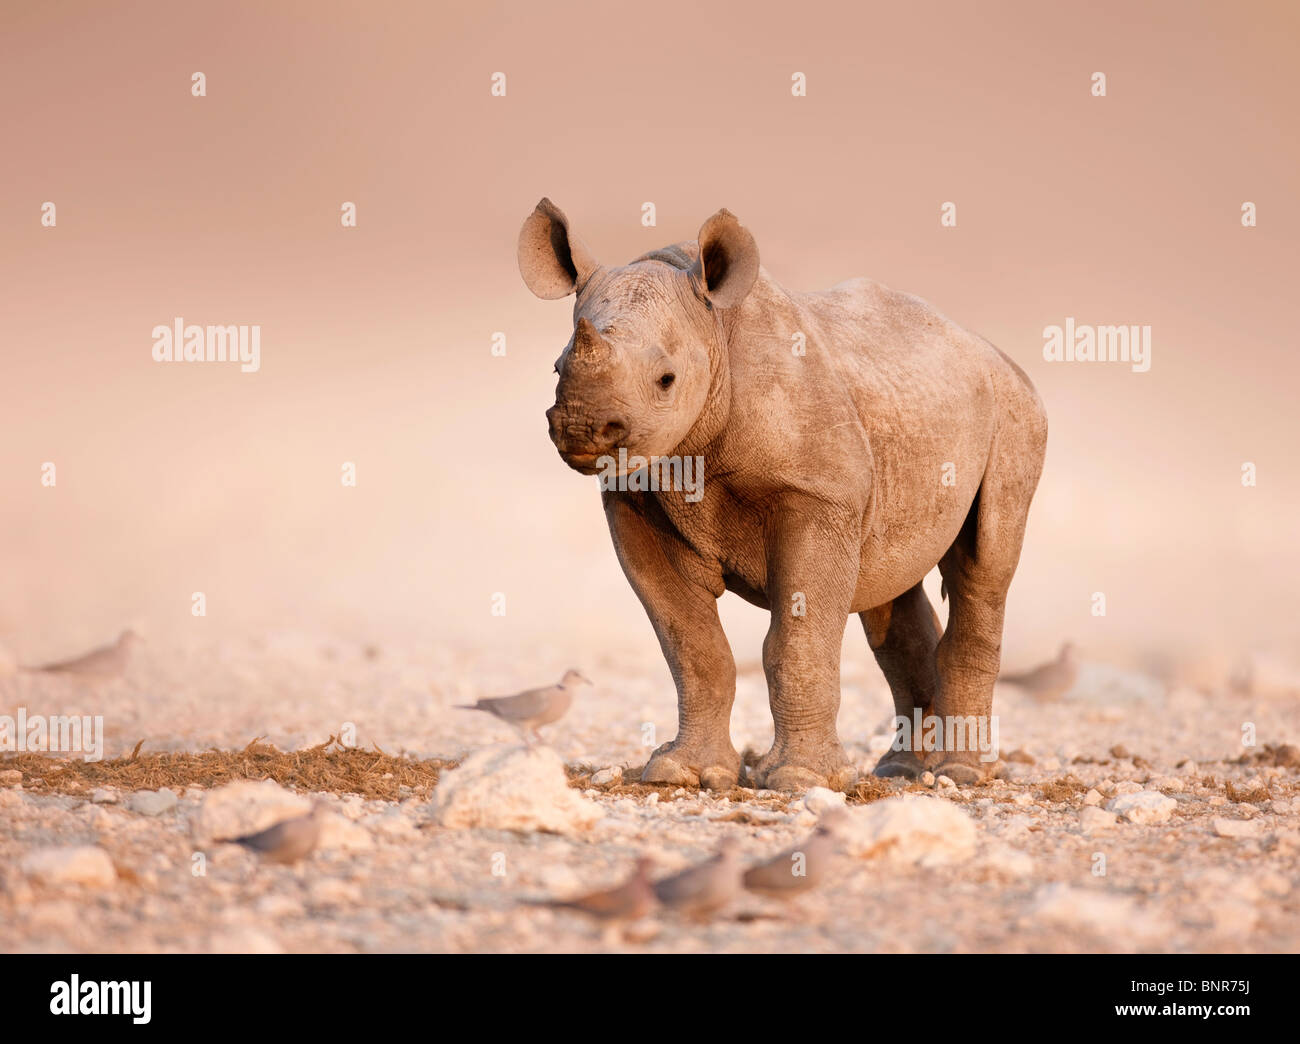 Baby Black Rhinoceros standing alone on salty plains of Etosha (Namibia) Stock Photo